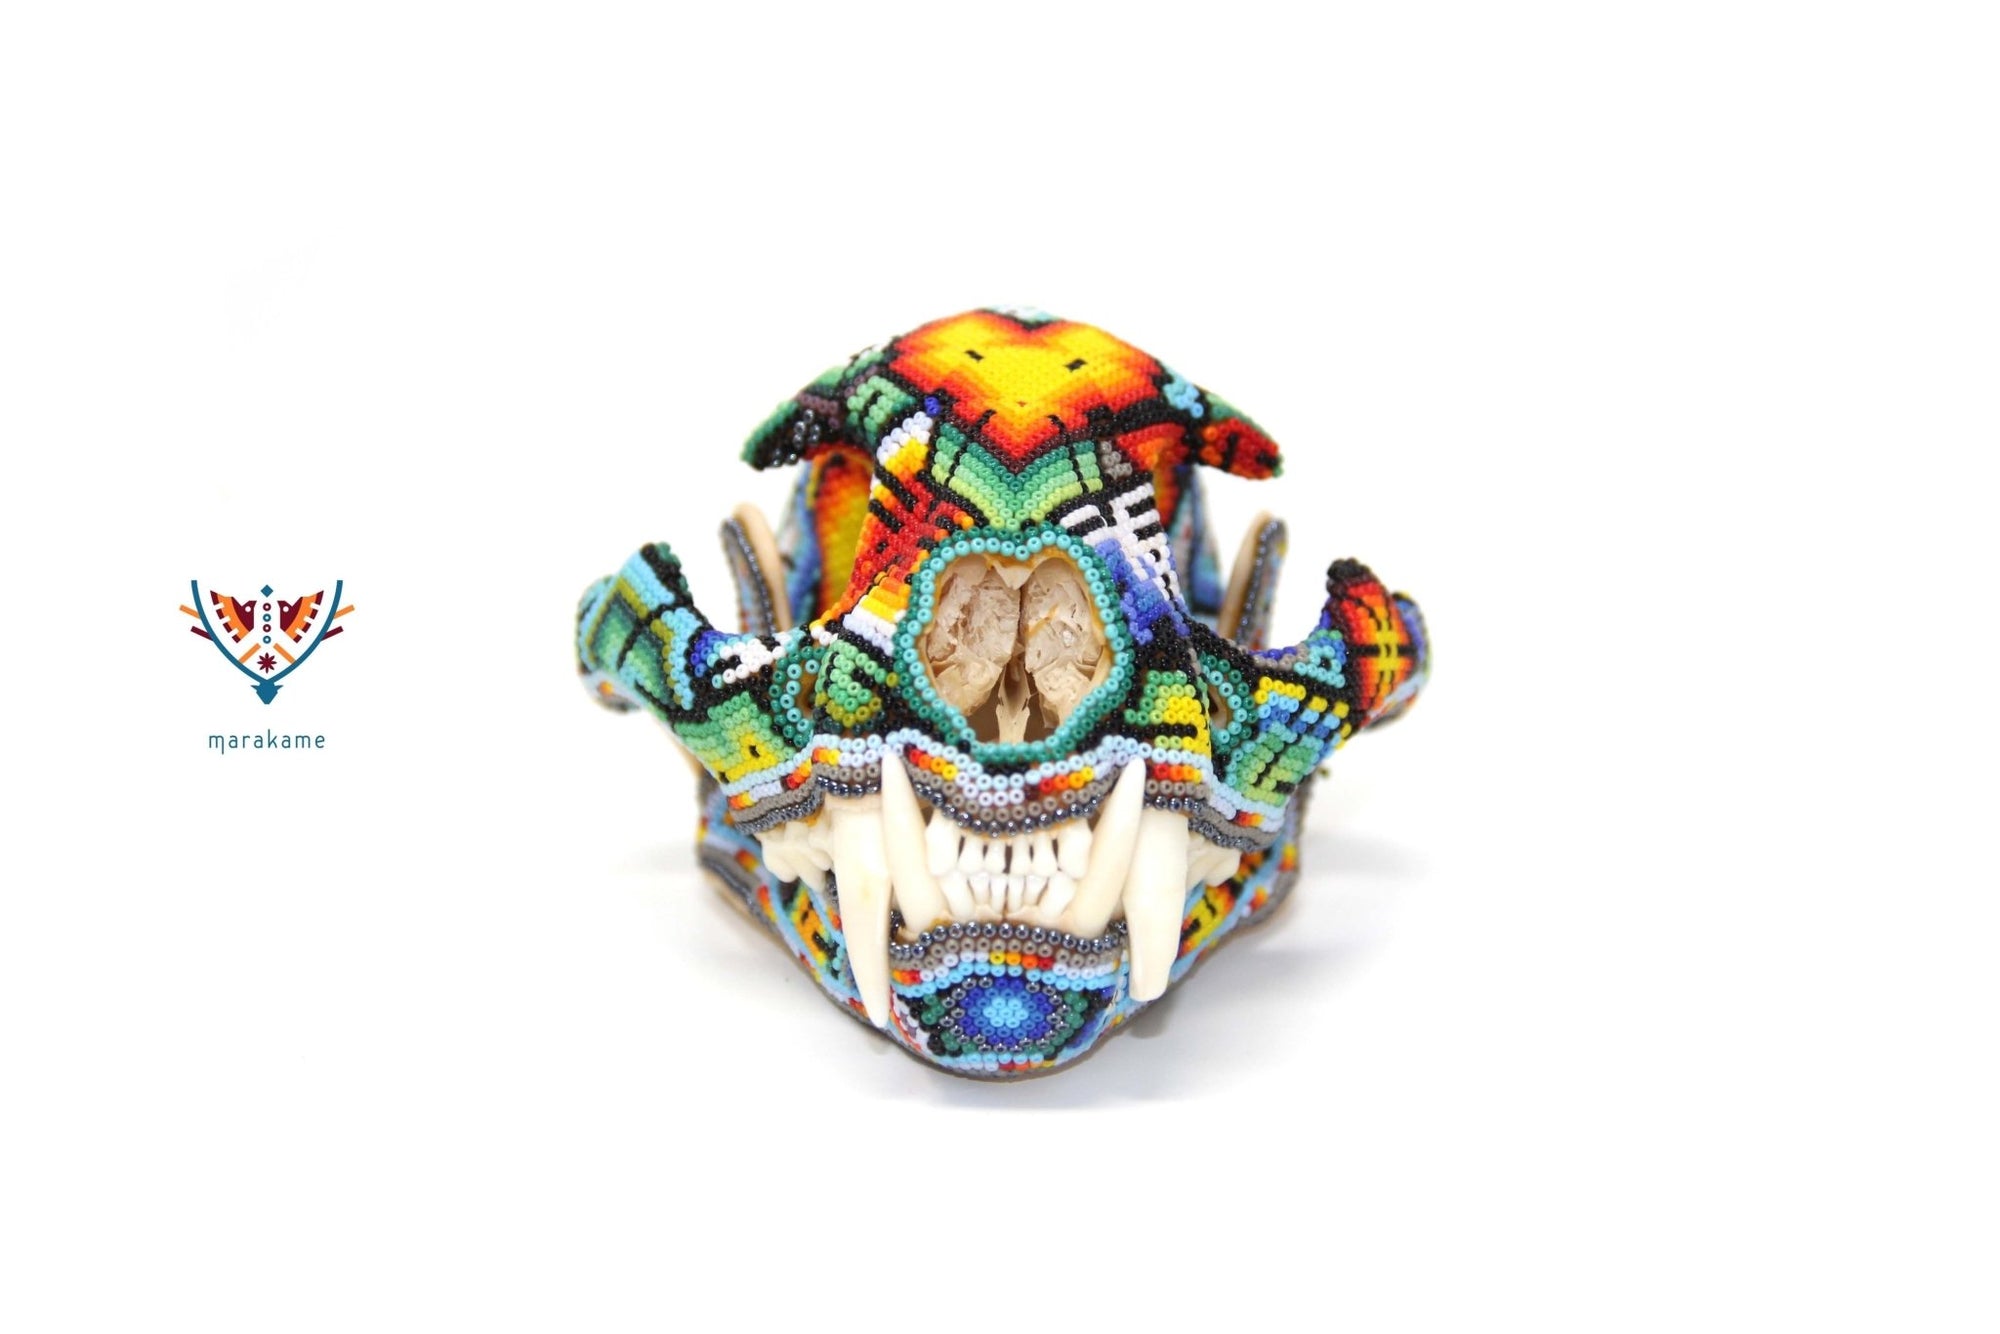 Huichol feline skull - "Ewi Xawe II" - Huichol art - Marakame